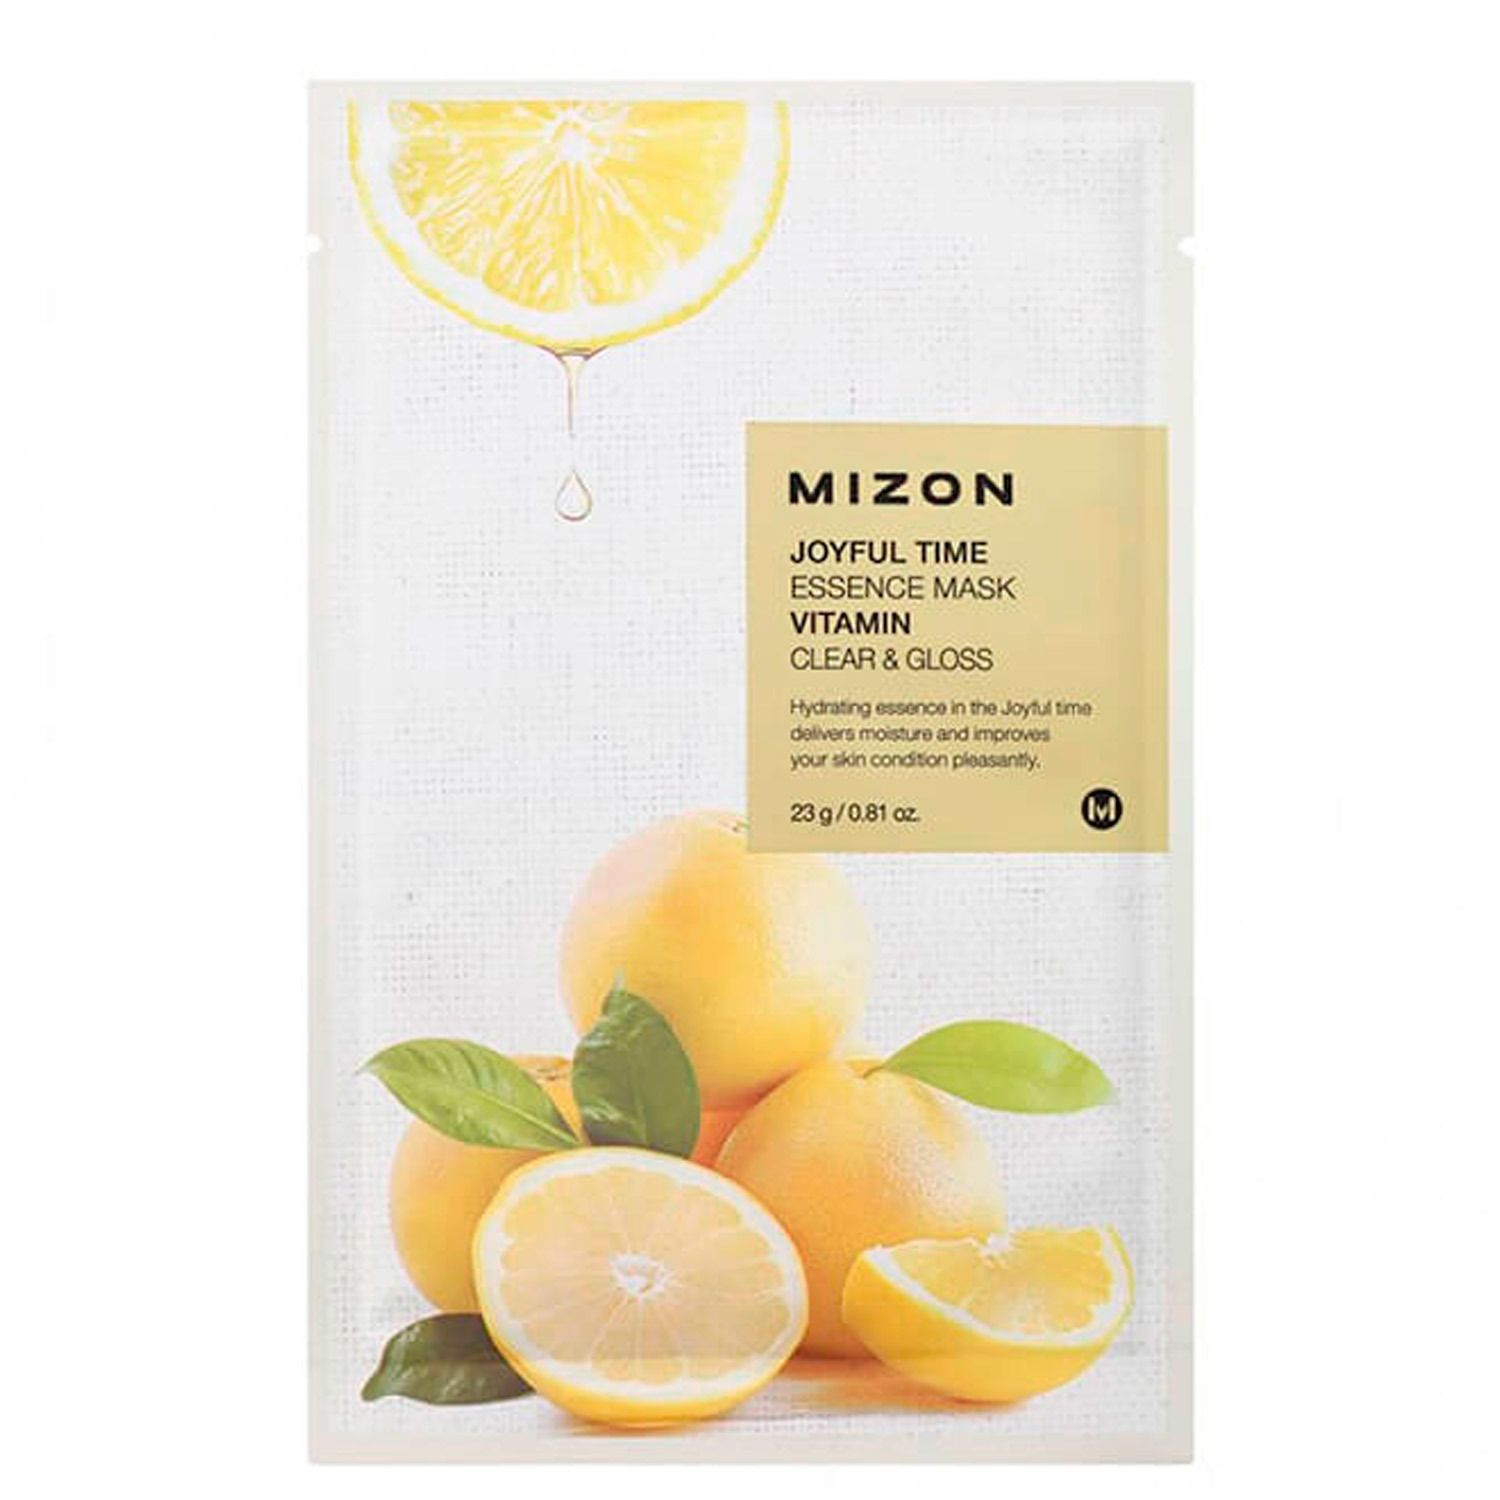 Mizon Joyful Time Essence Mask Vitamin 23 g  1 sheet